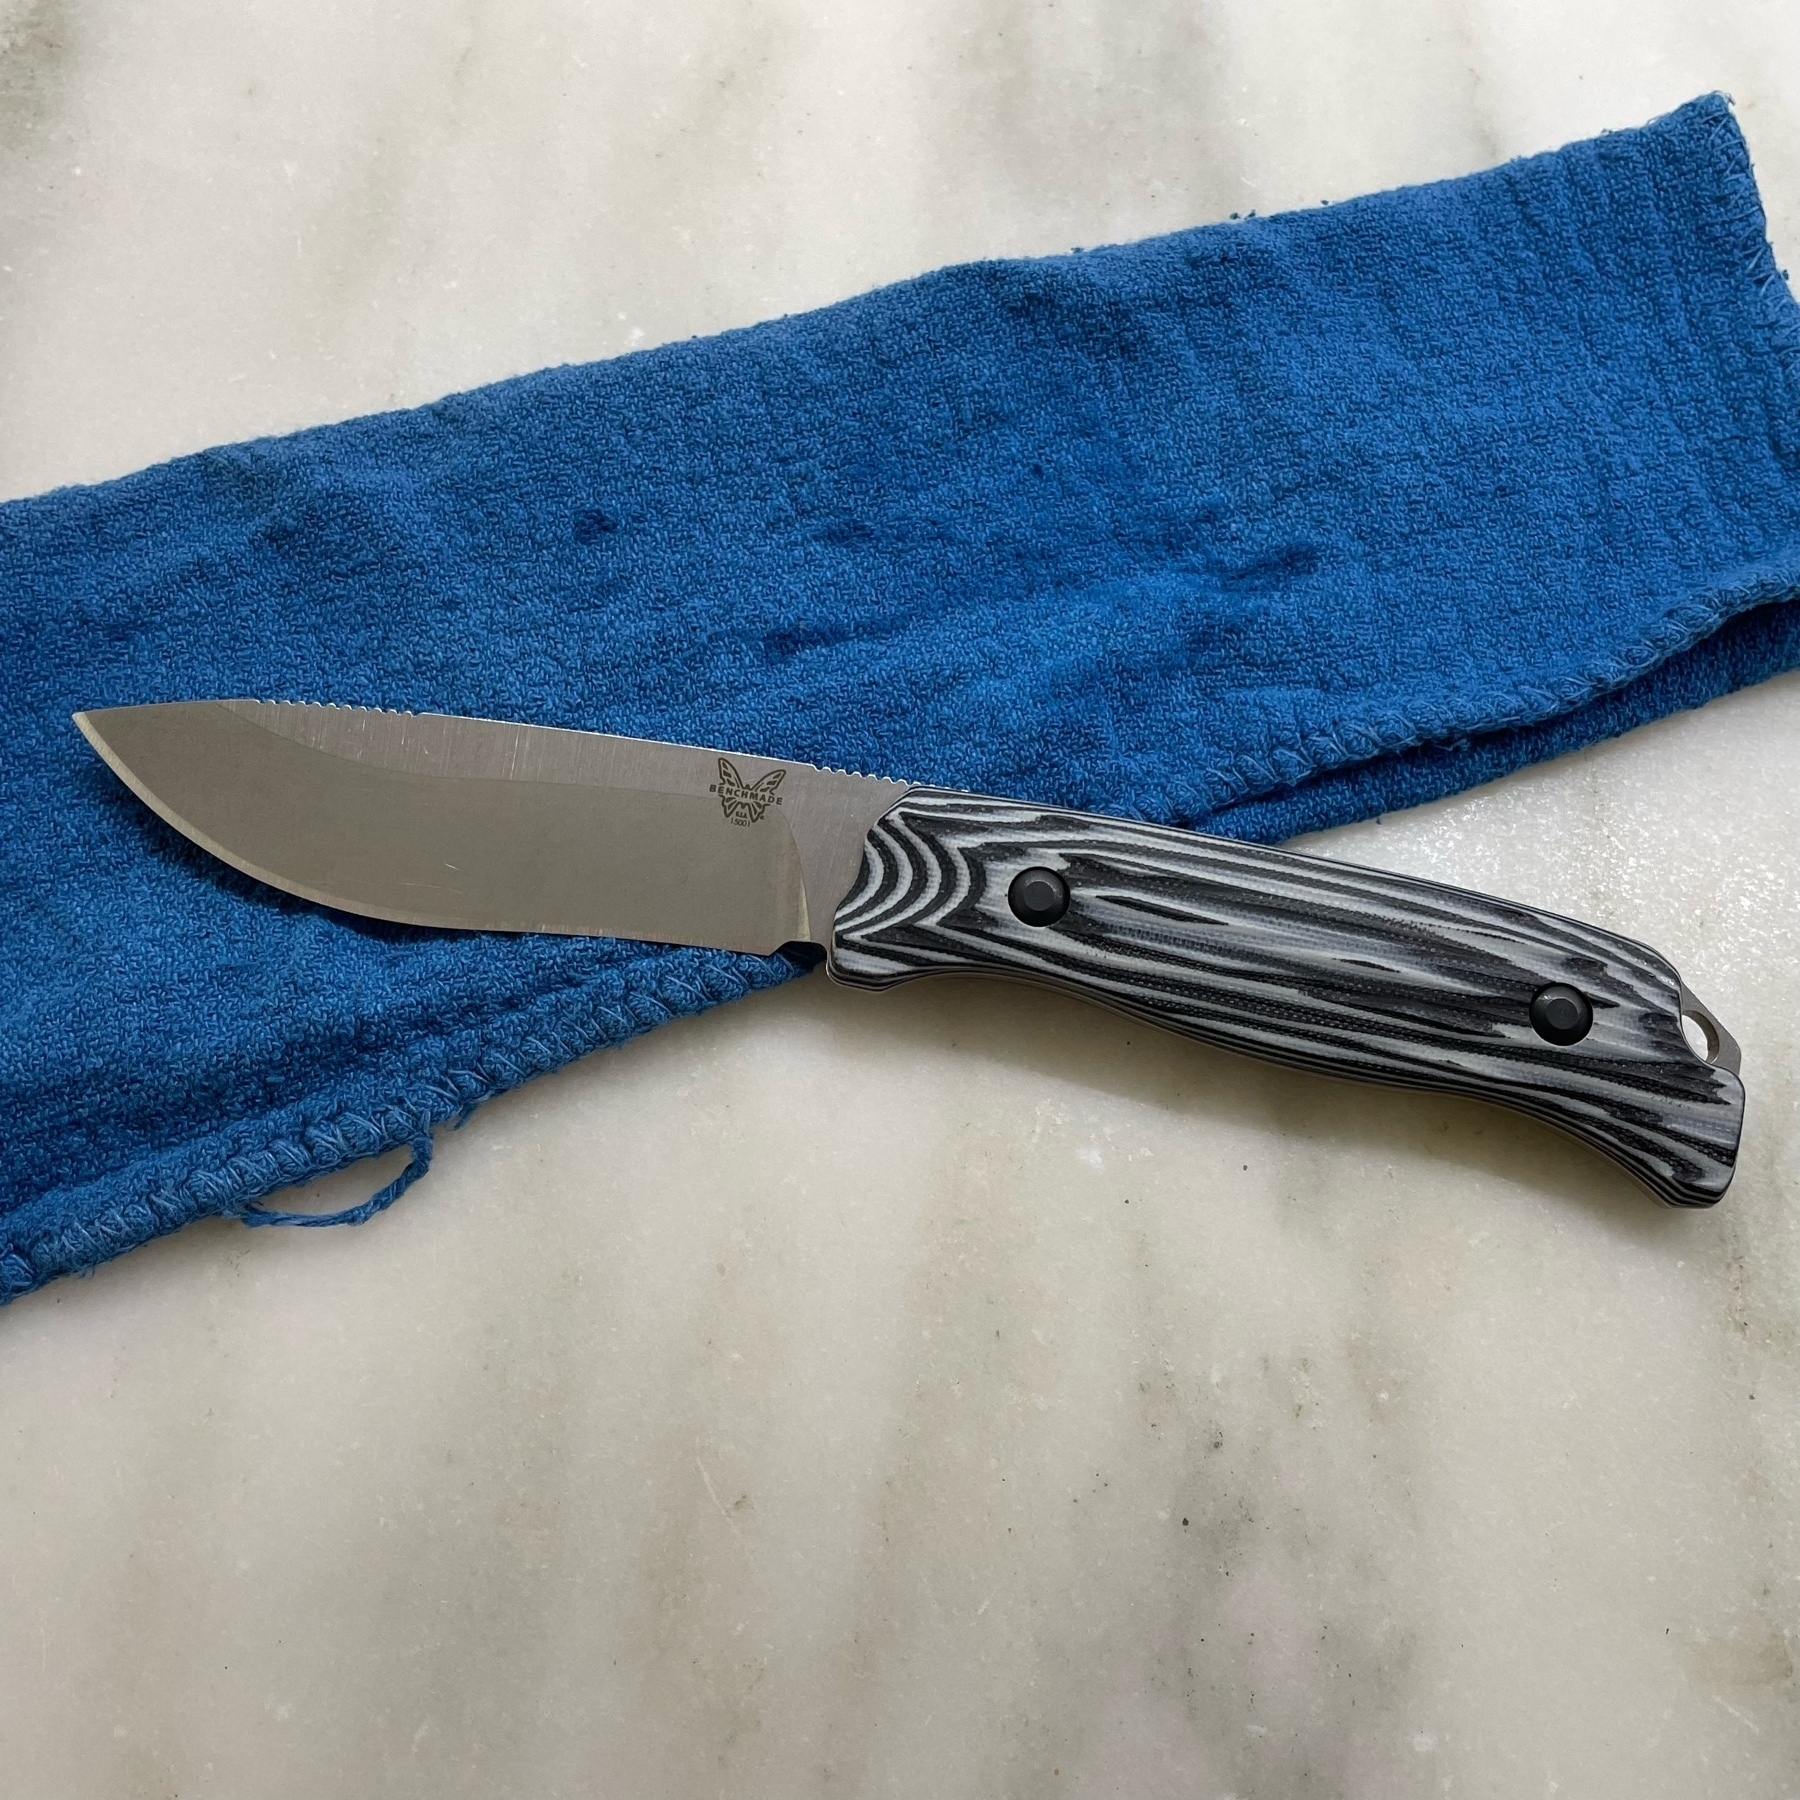 Knife on blue shop cloth